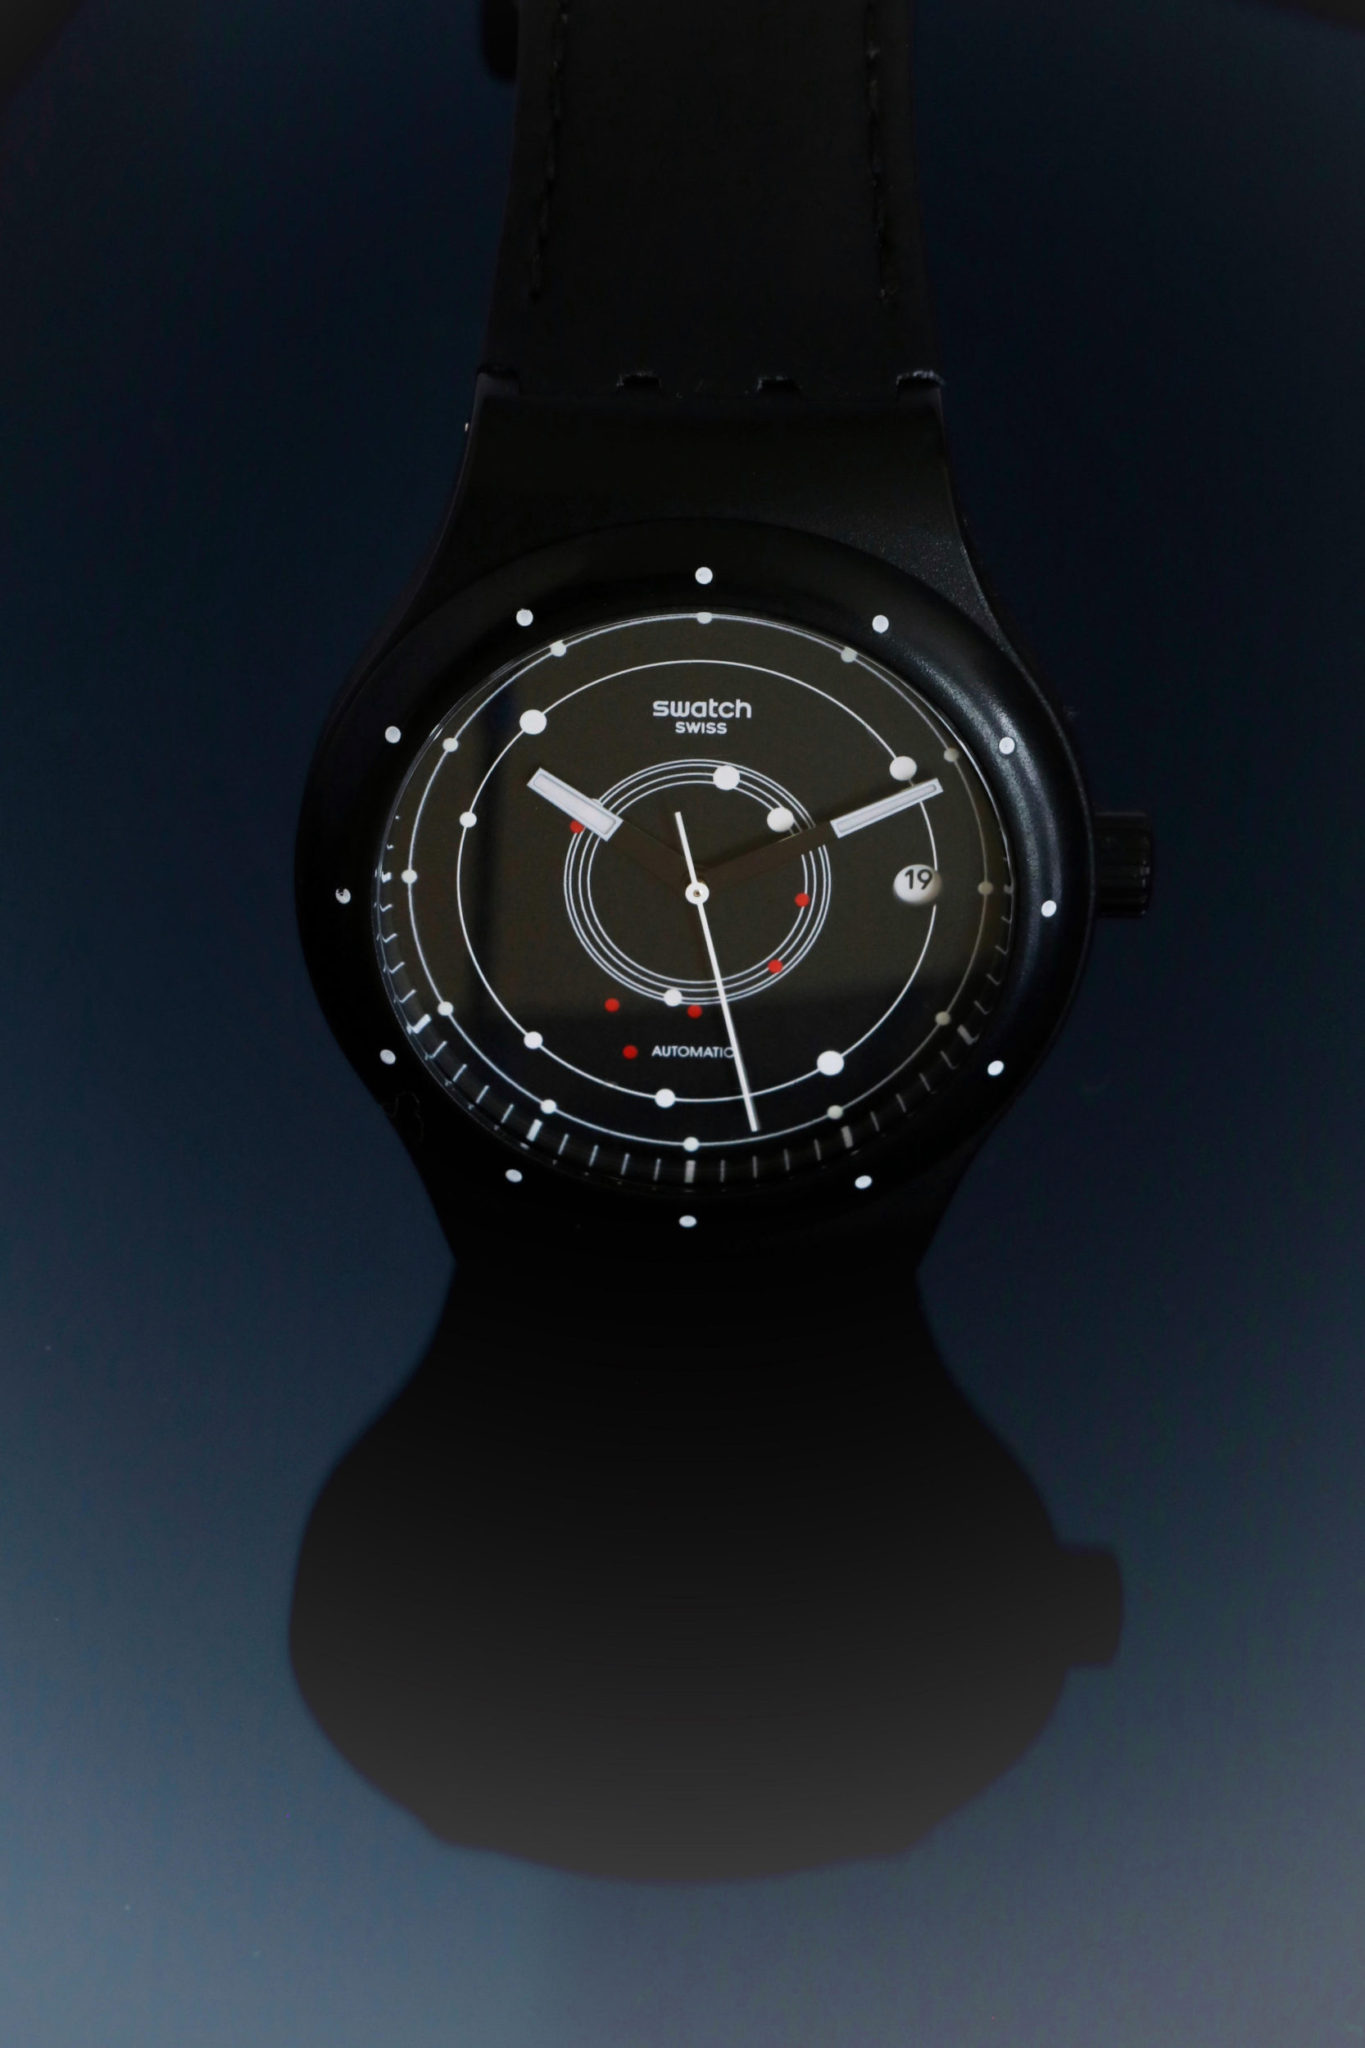 Fugaz proteína Tina Owner Review: Swatch Sistem51 - The worst watch ever made?